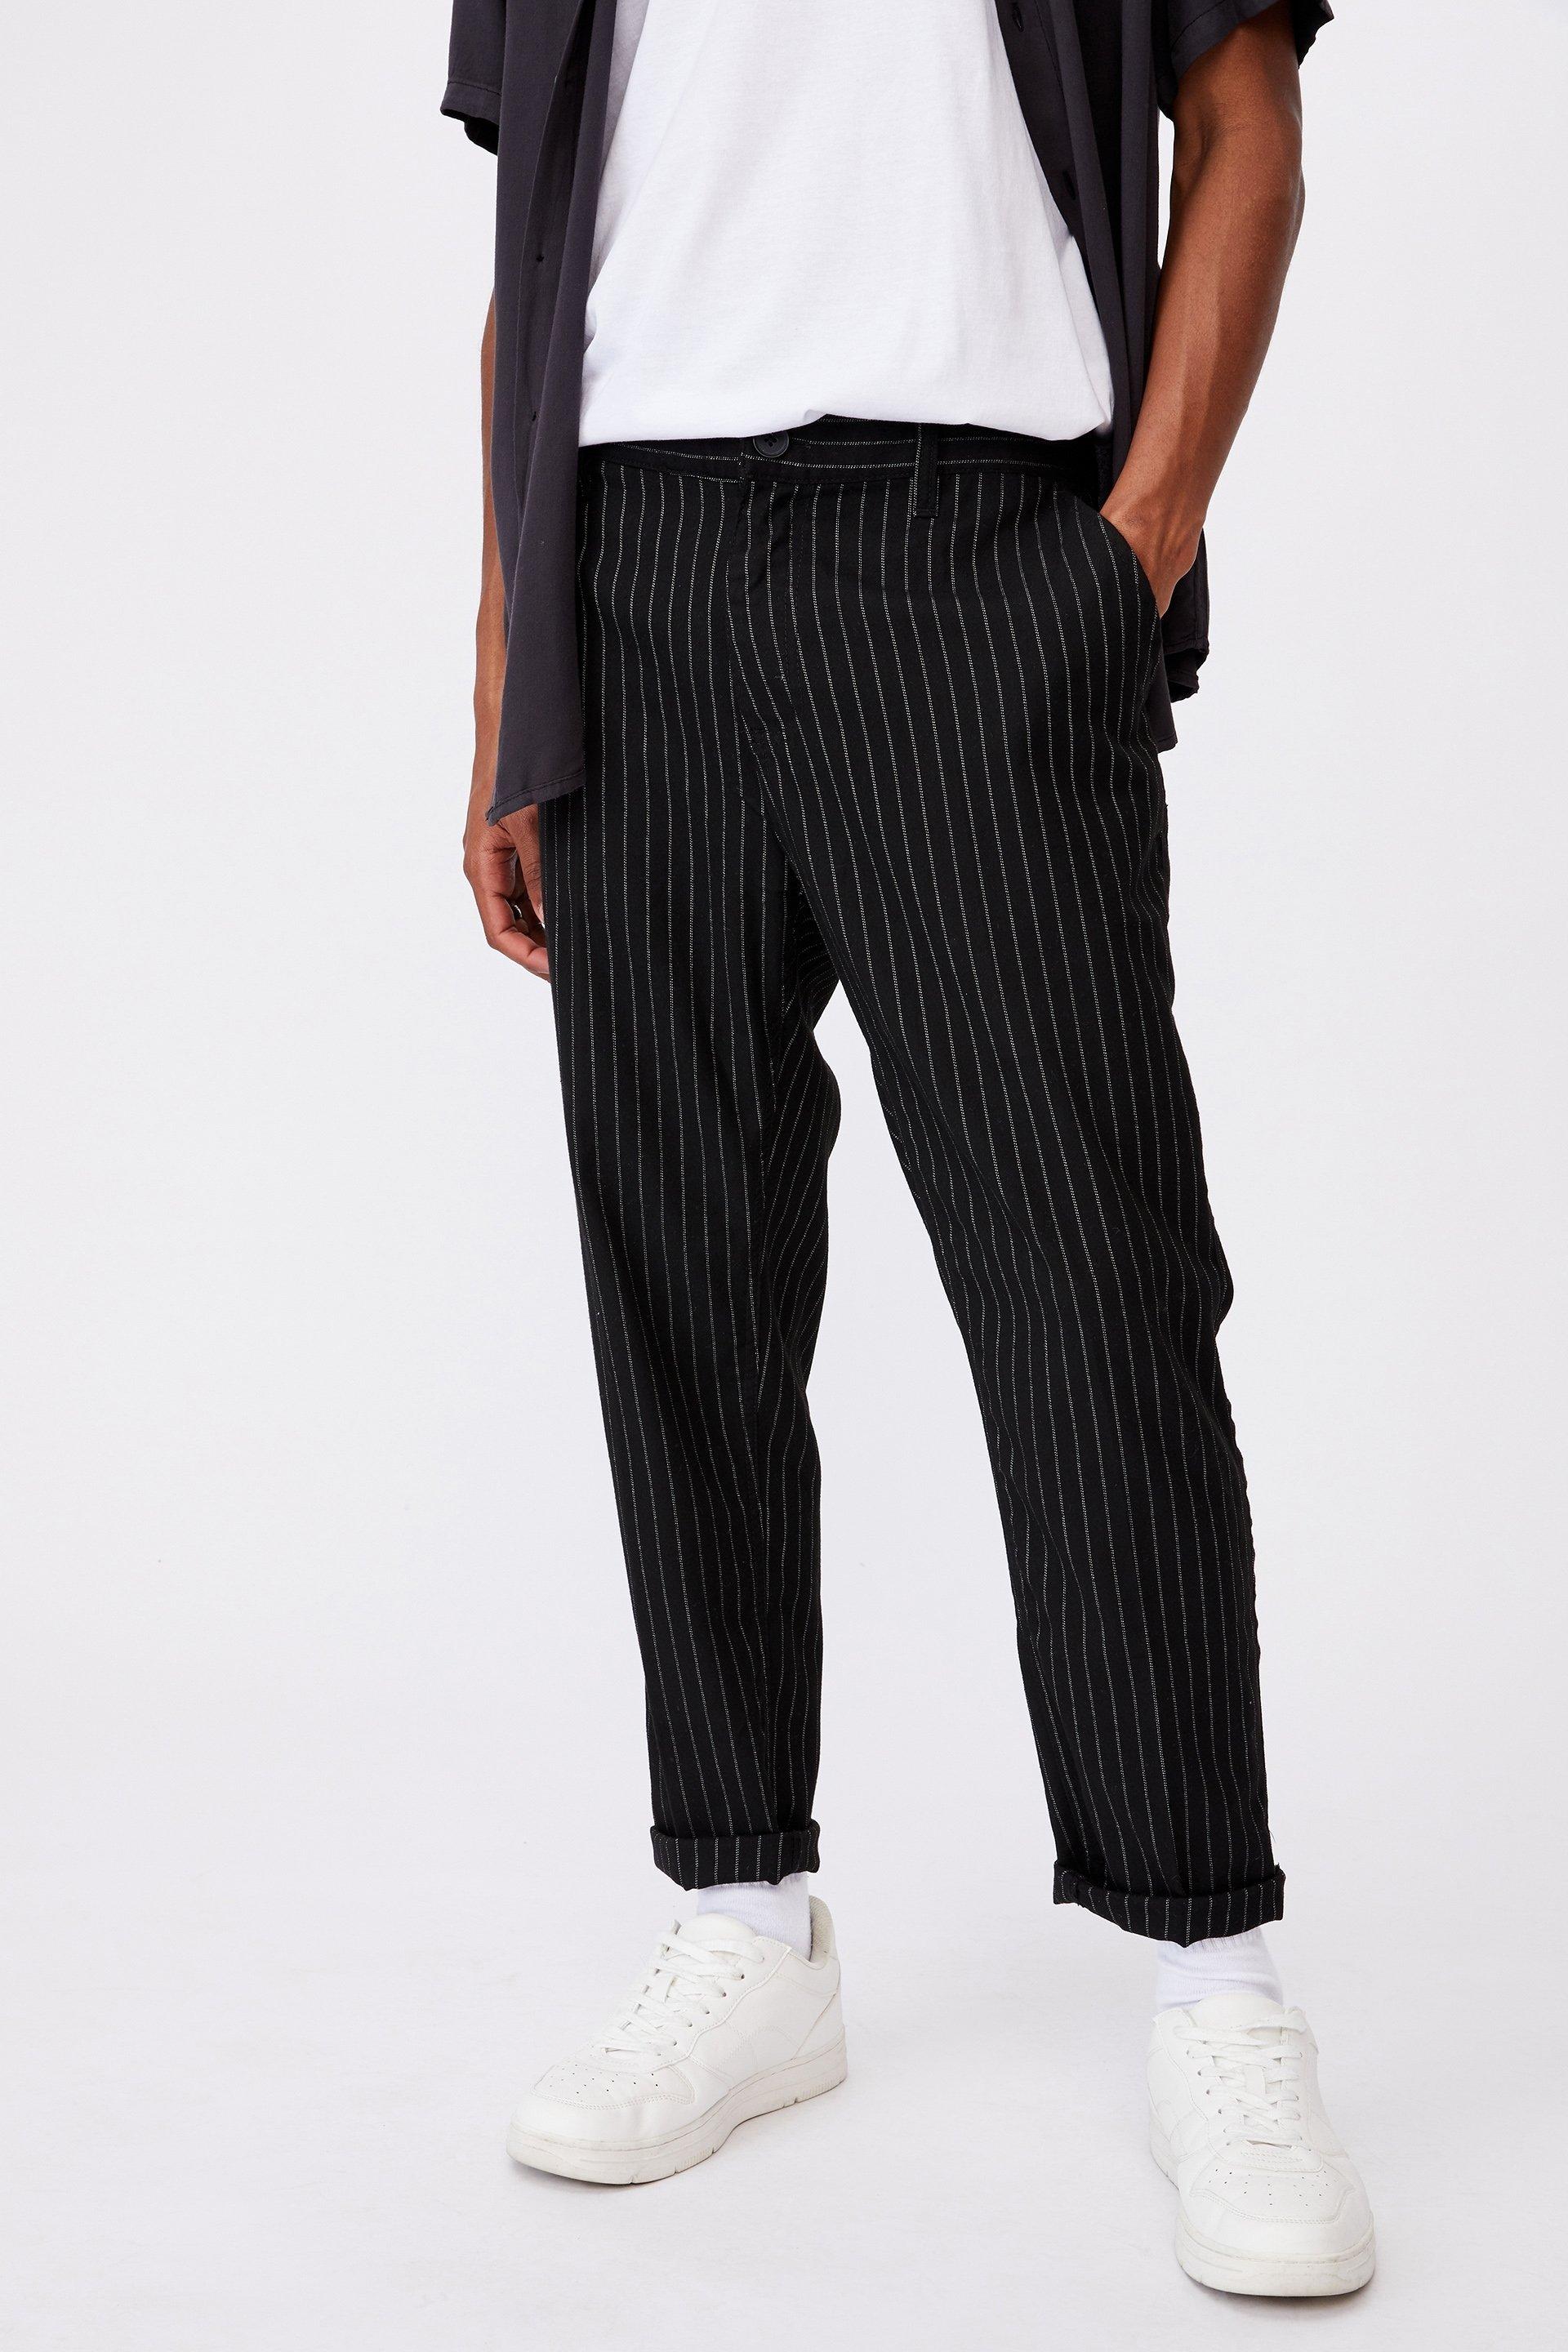 Oxford trouser - pinstripe black Cotton On Pants & Chinos | Superbalist.com